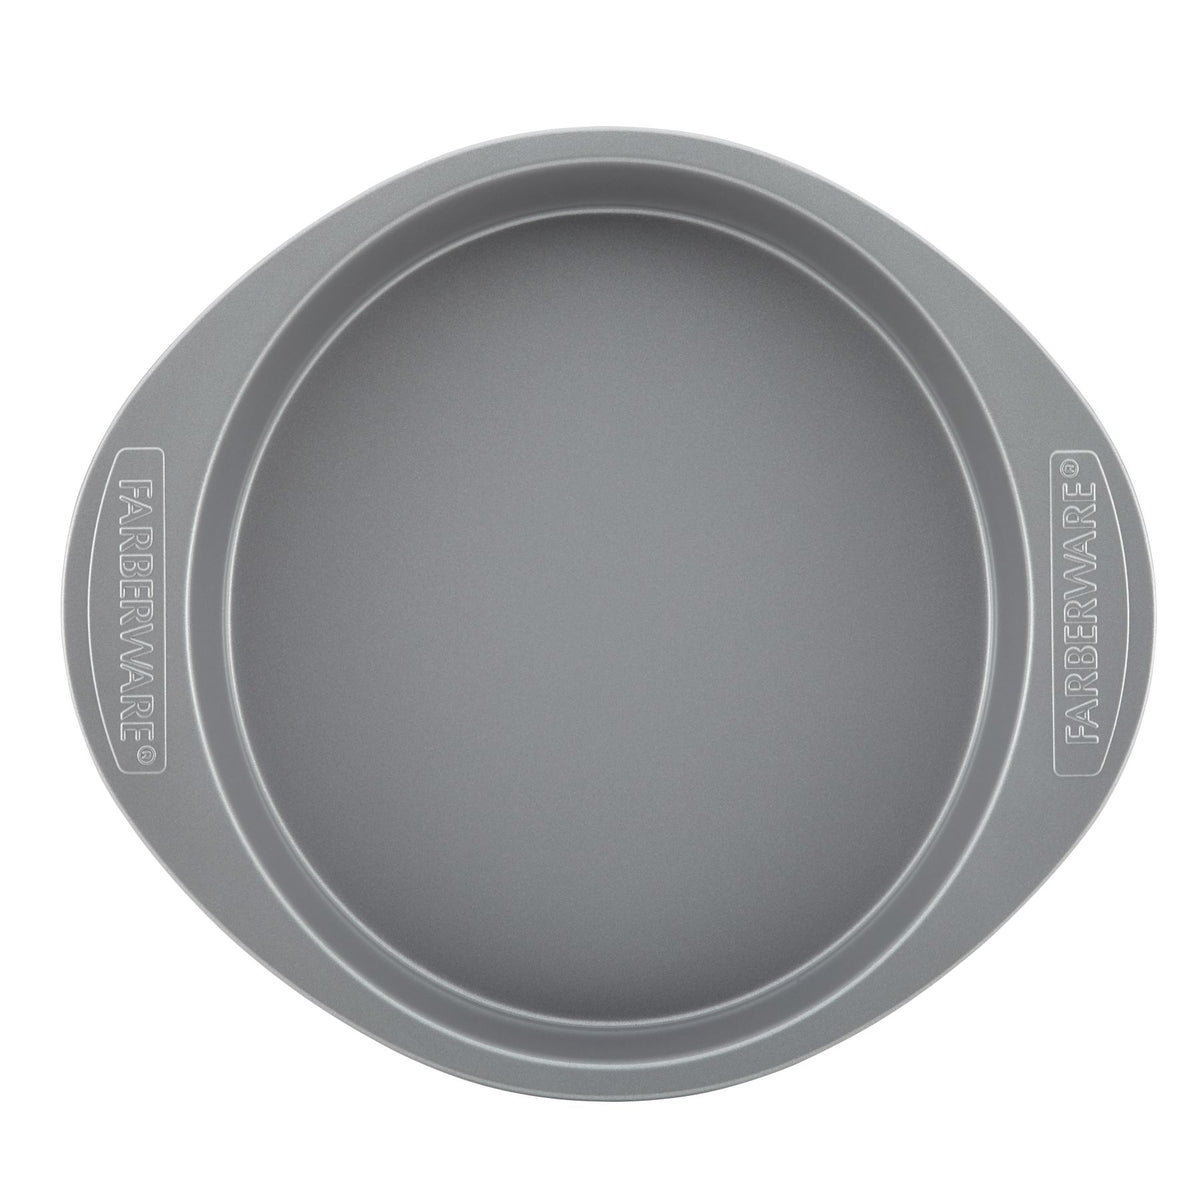 Farberware 9-Inch Round Nonstick Cake Pan, Blue